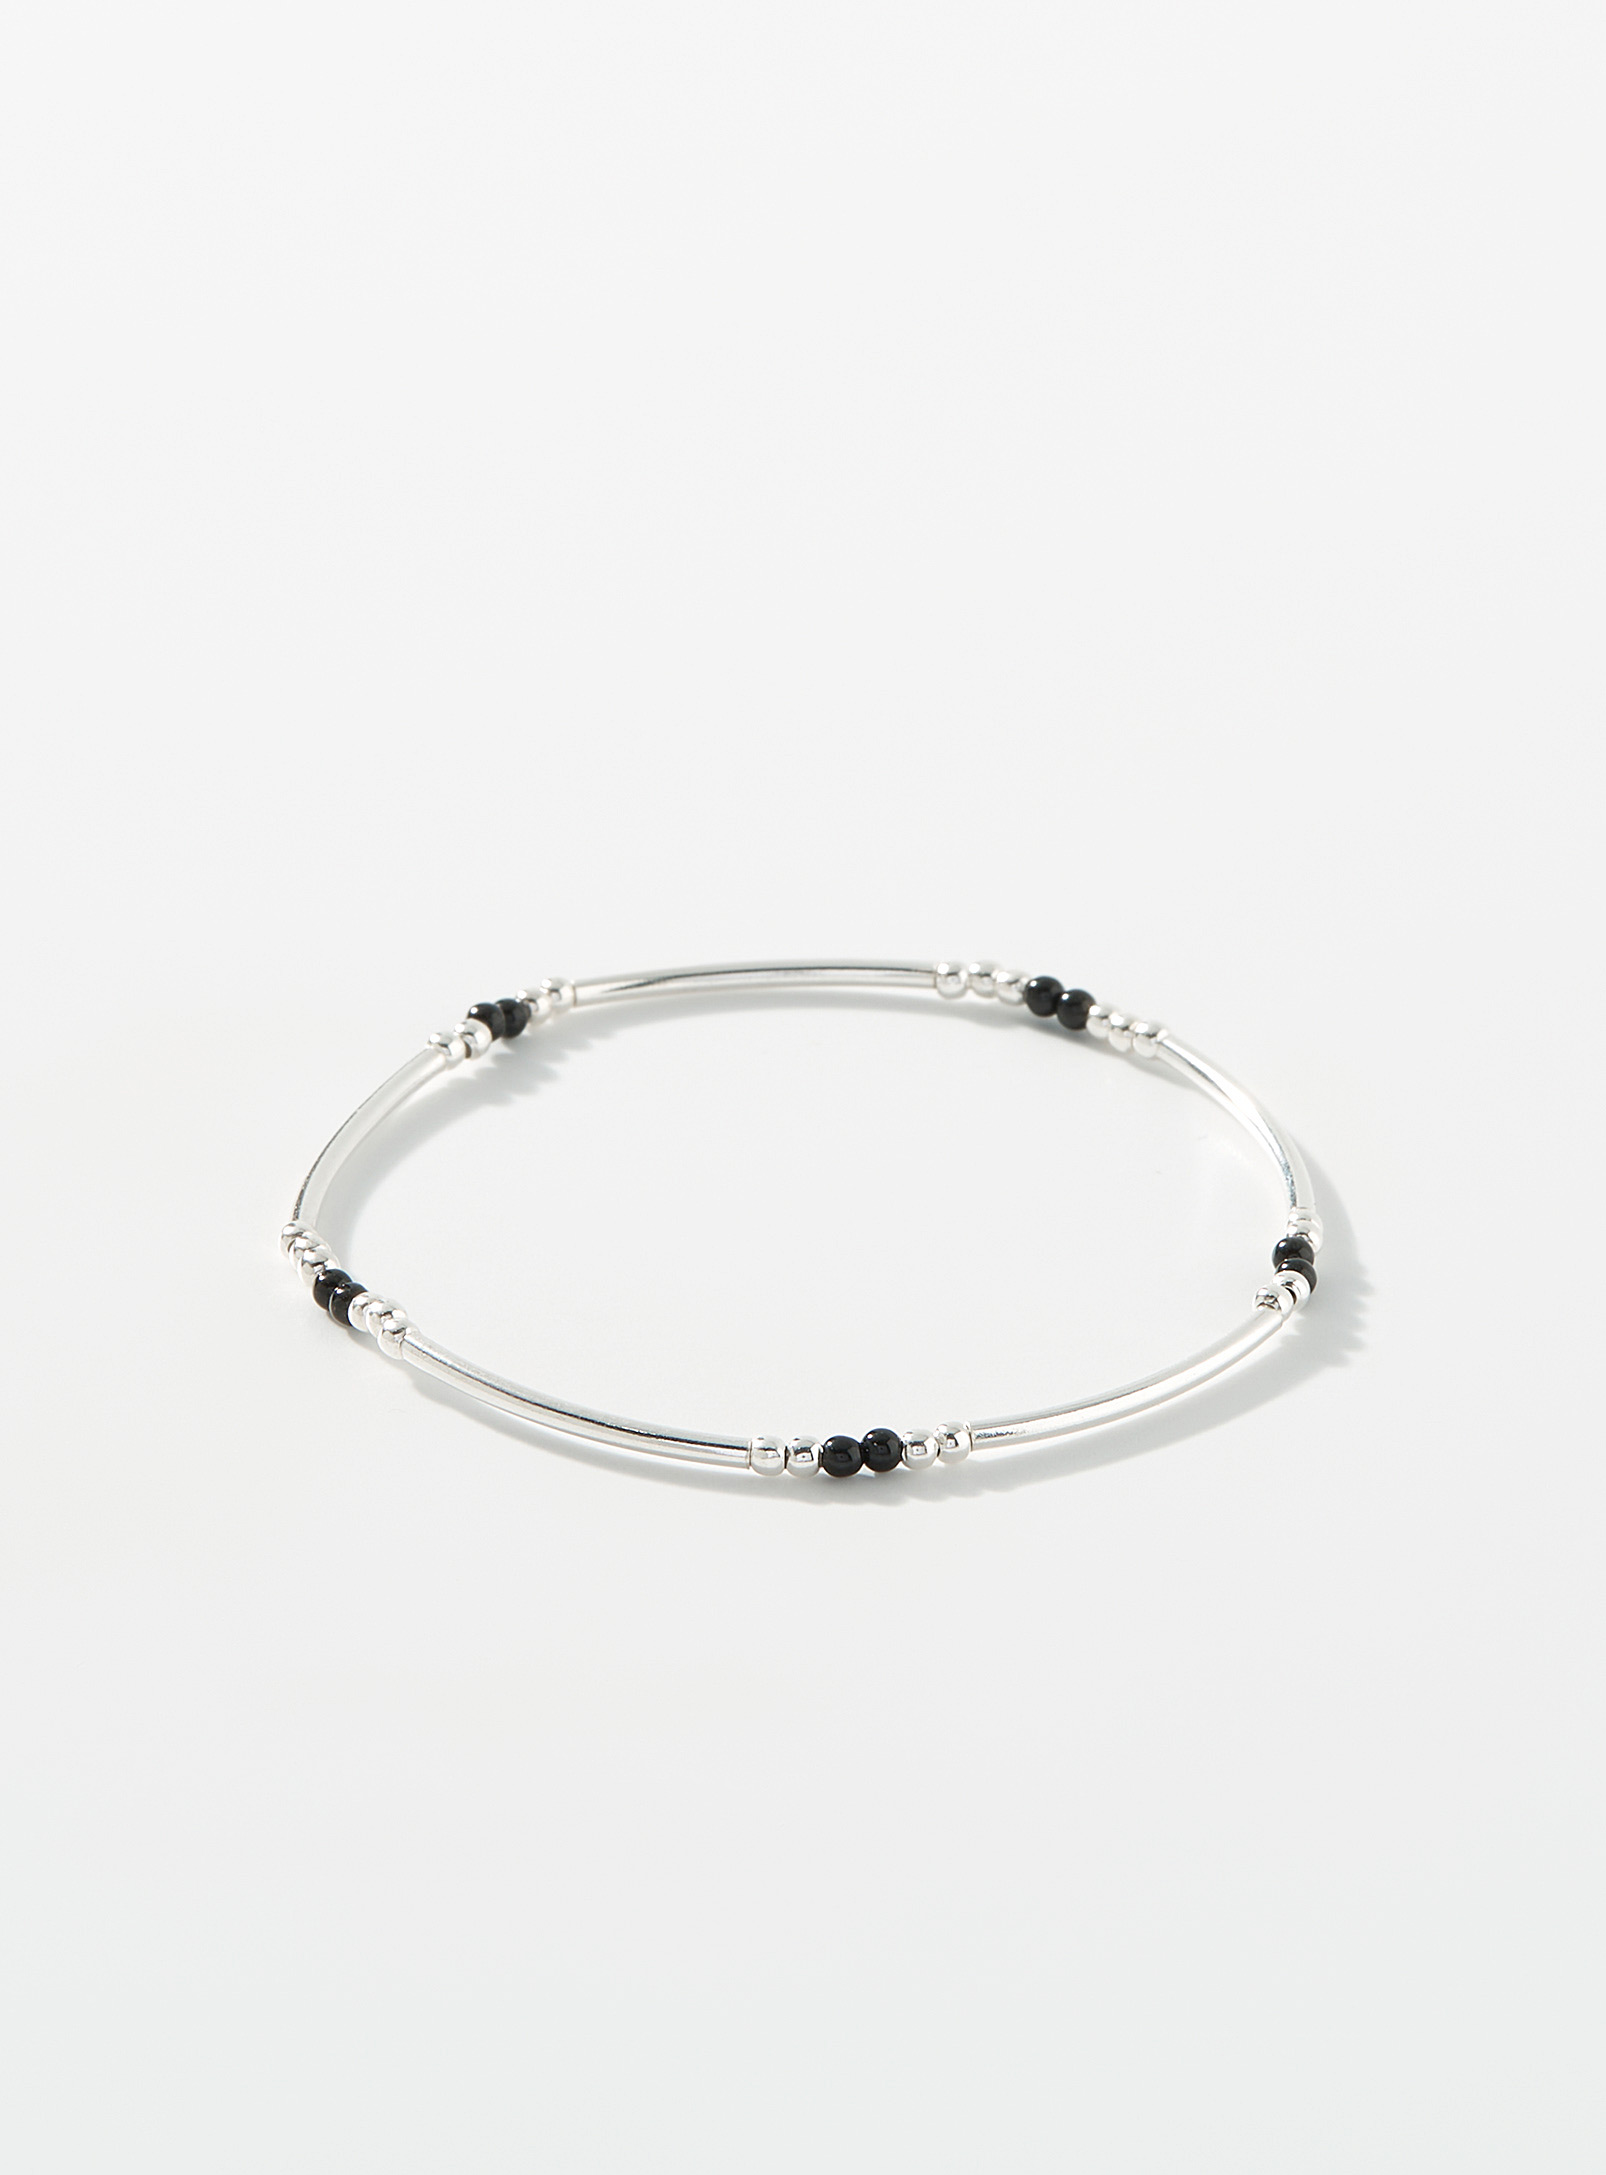 Simons - Women's Silver rod and bead bracelet